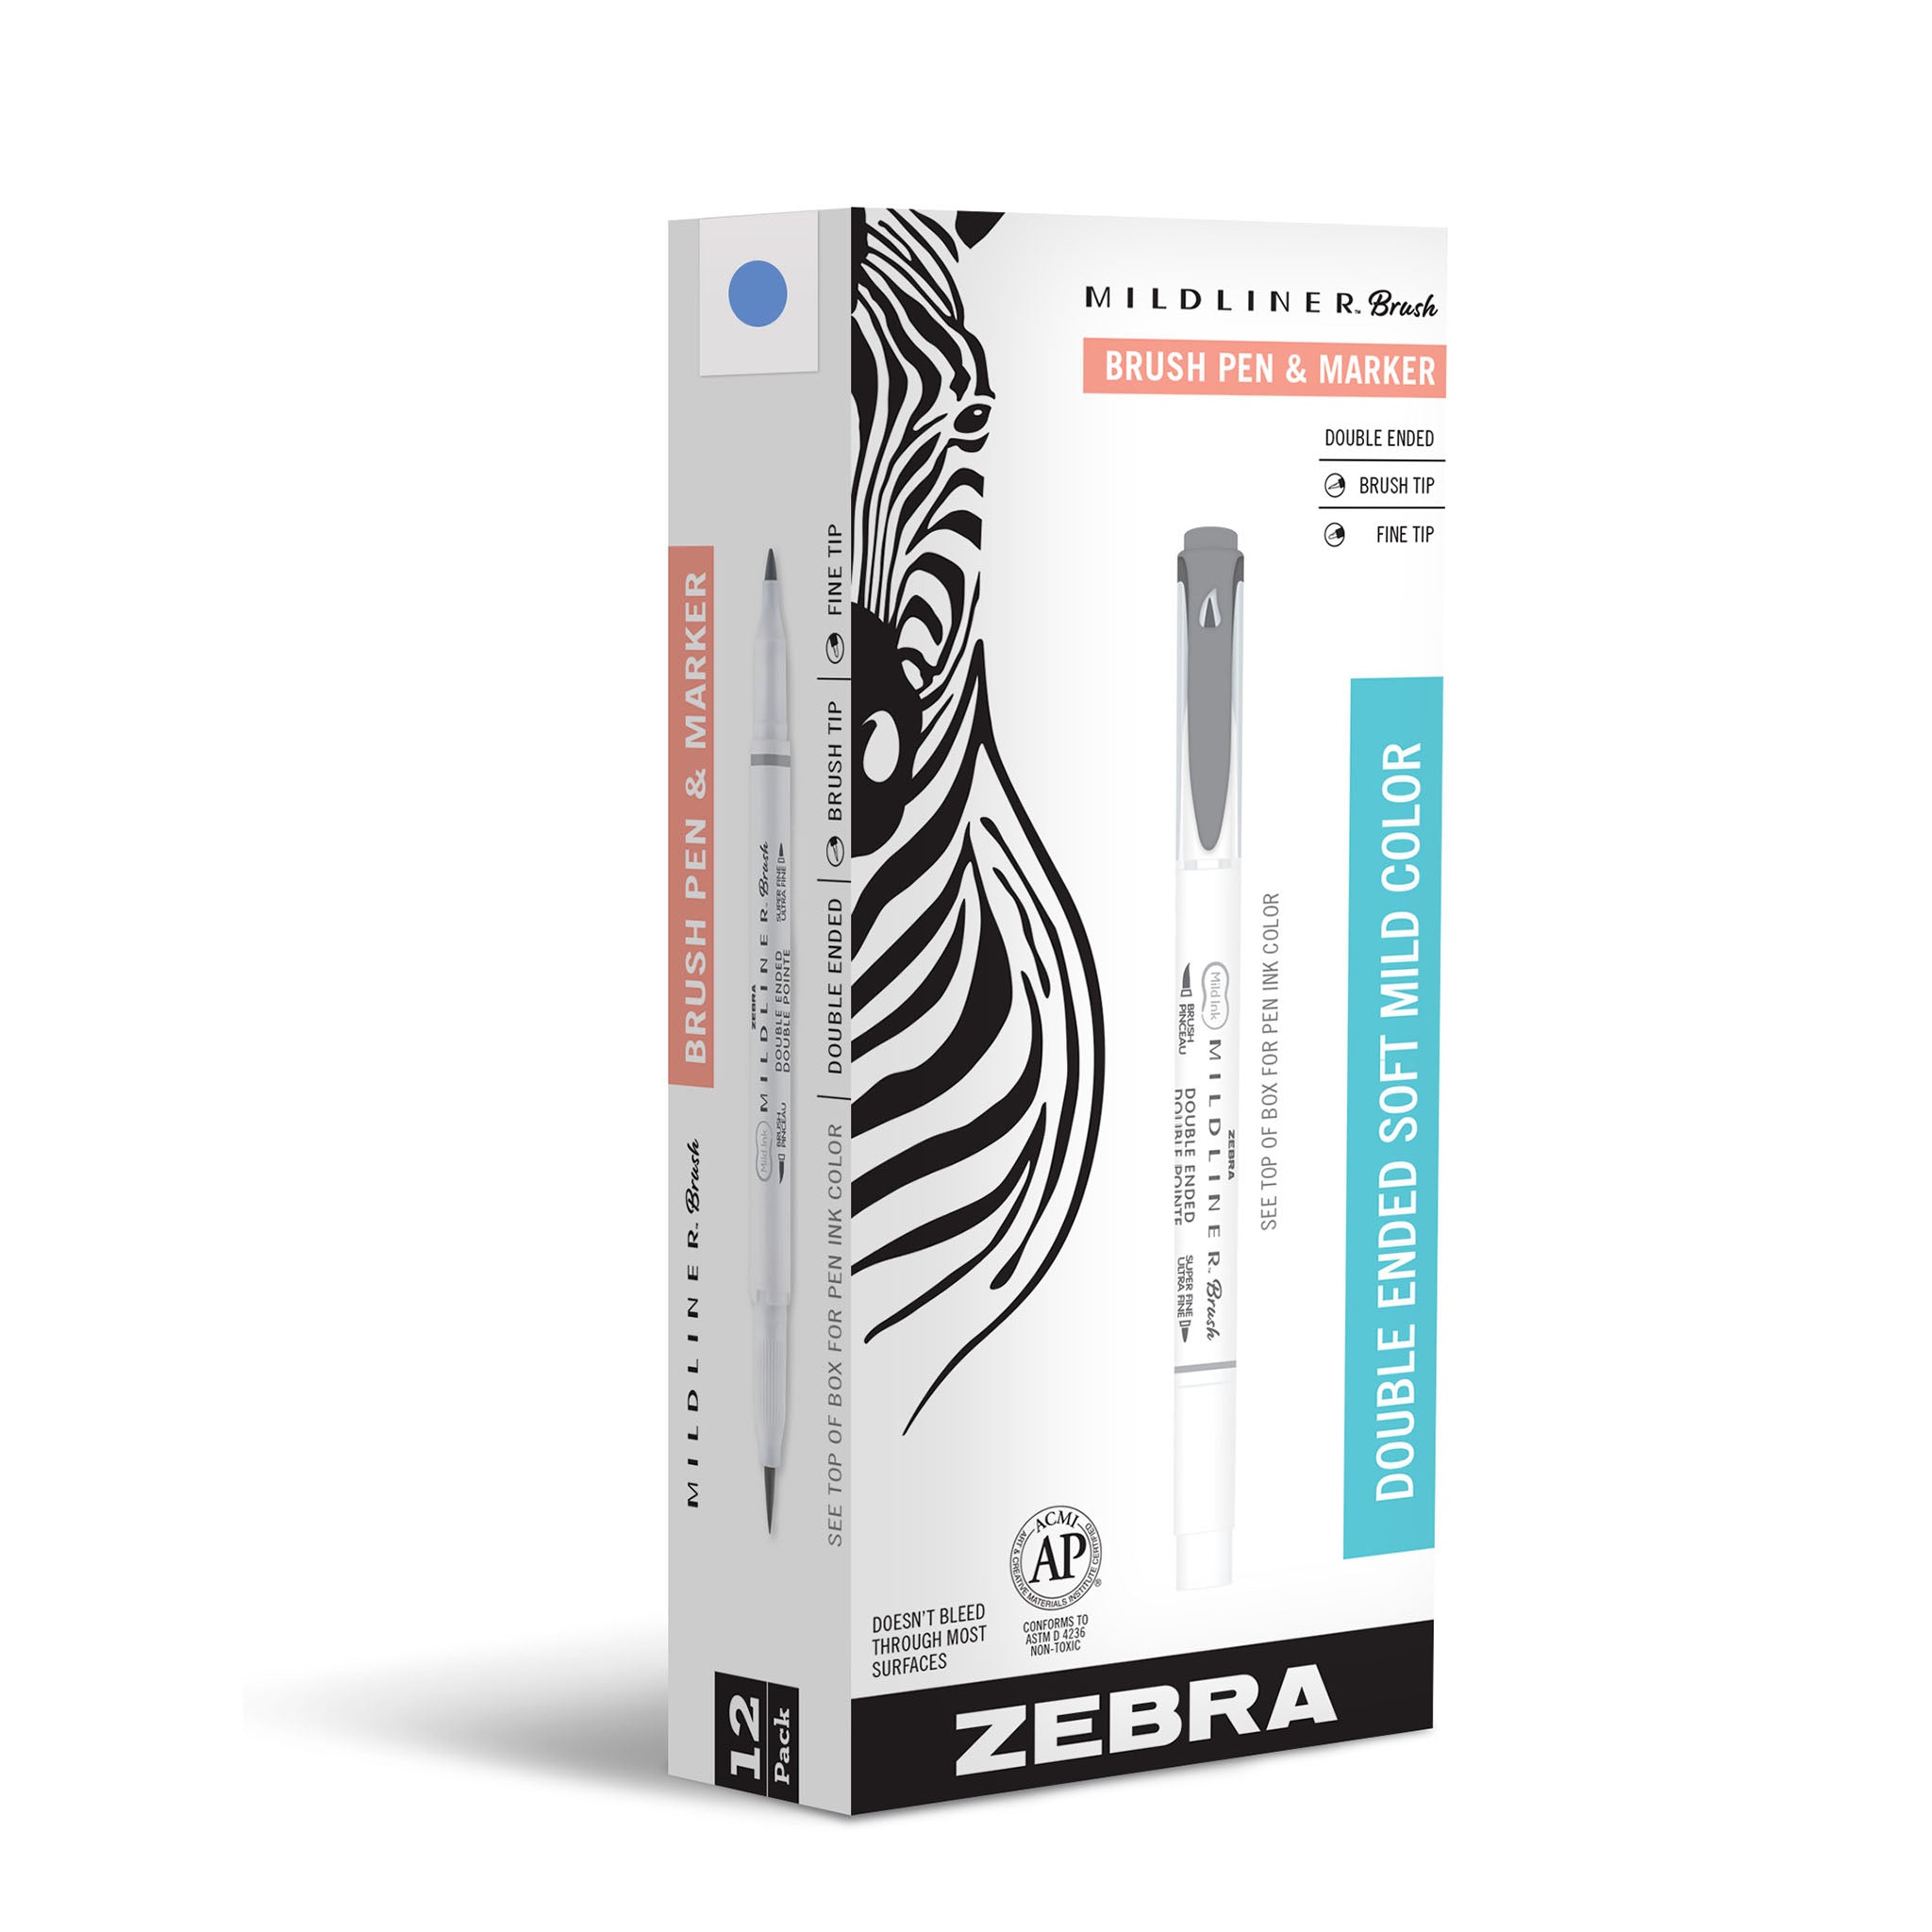 Zebra 32 Piece Creativity Kit Box Organizer Mildliner Brush Pen